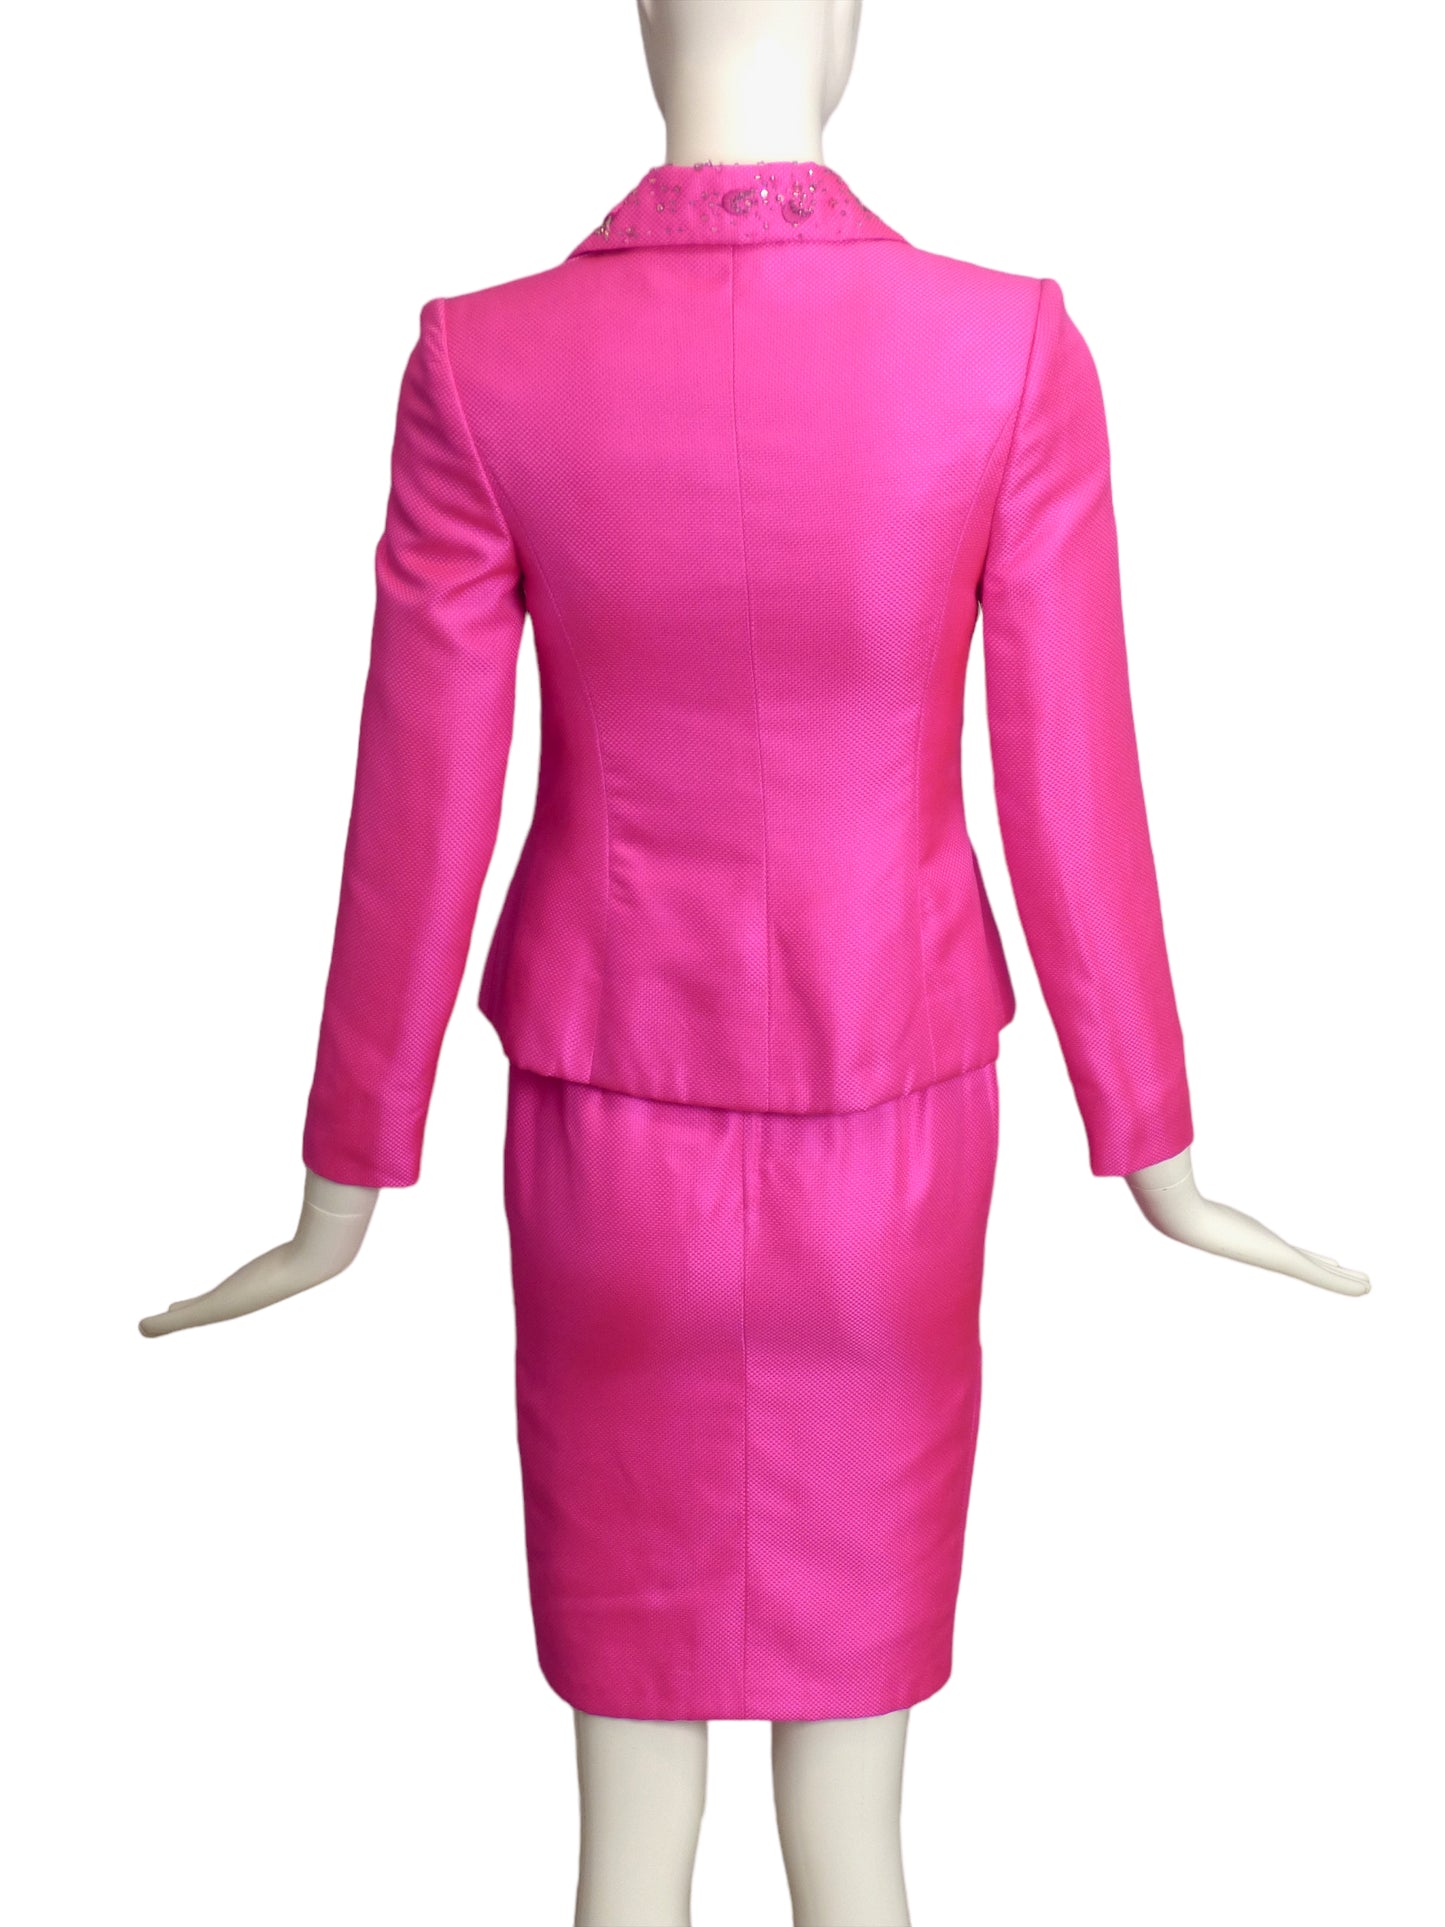 MIRELLA CAVORSO-Beaded Silk Brocade Cocktail Suit, Size-4P